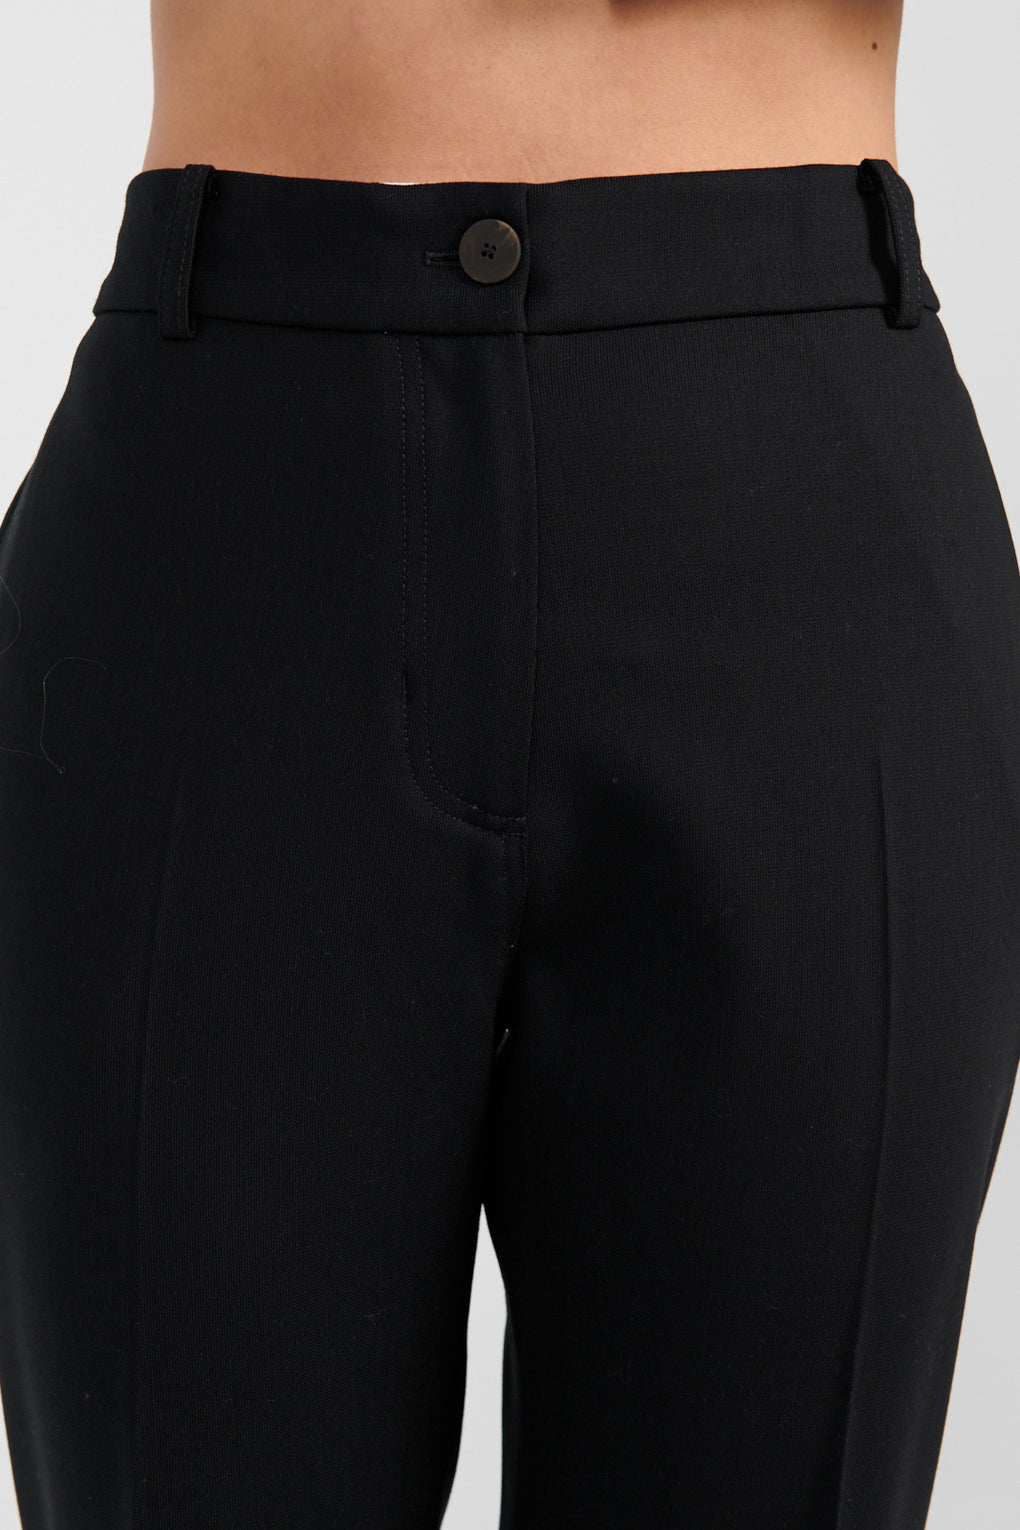 Studio Nicholson Rie Trouser Pant darkest navy-Idun-St. Paul